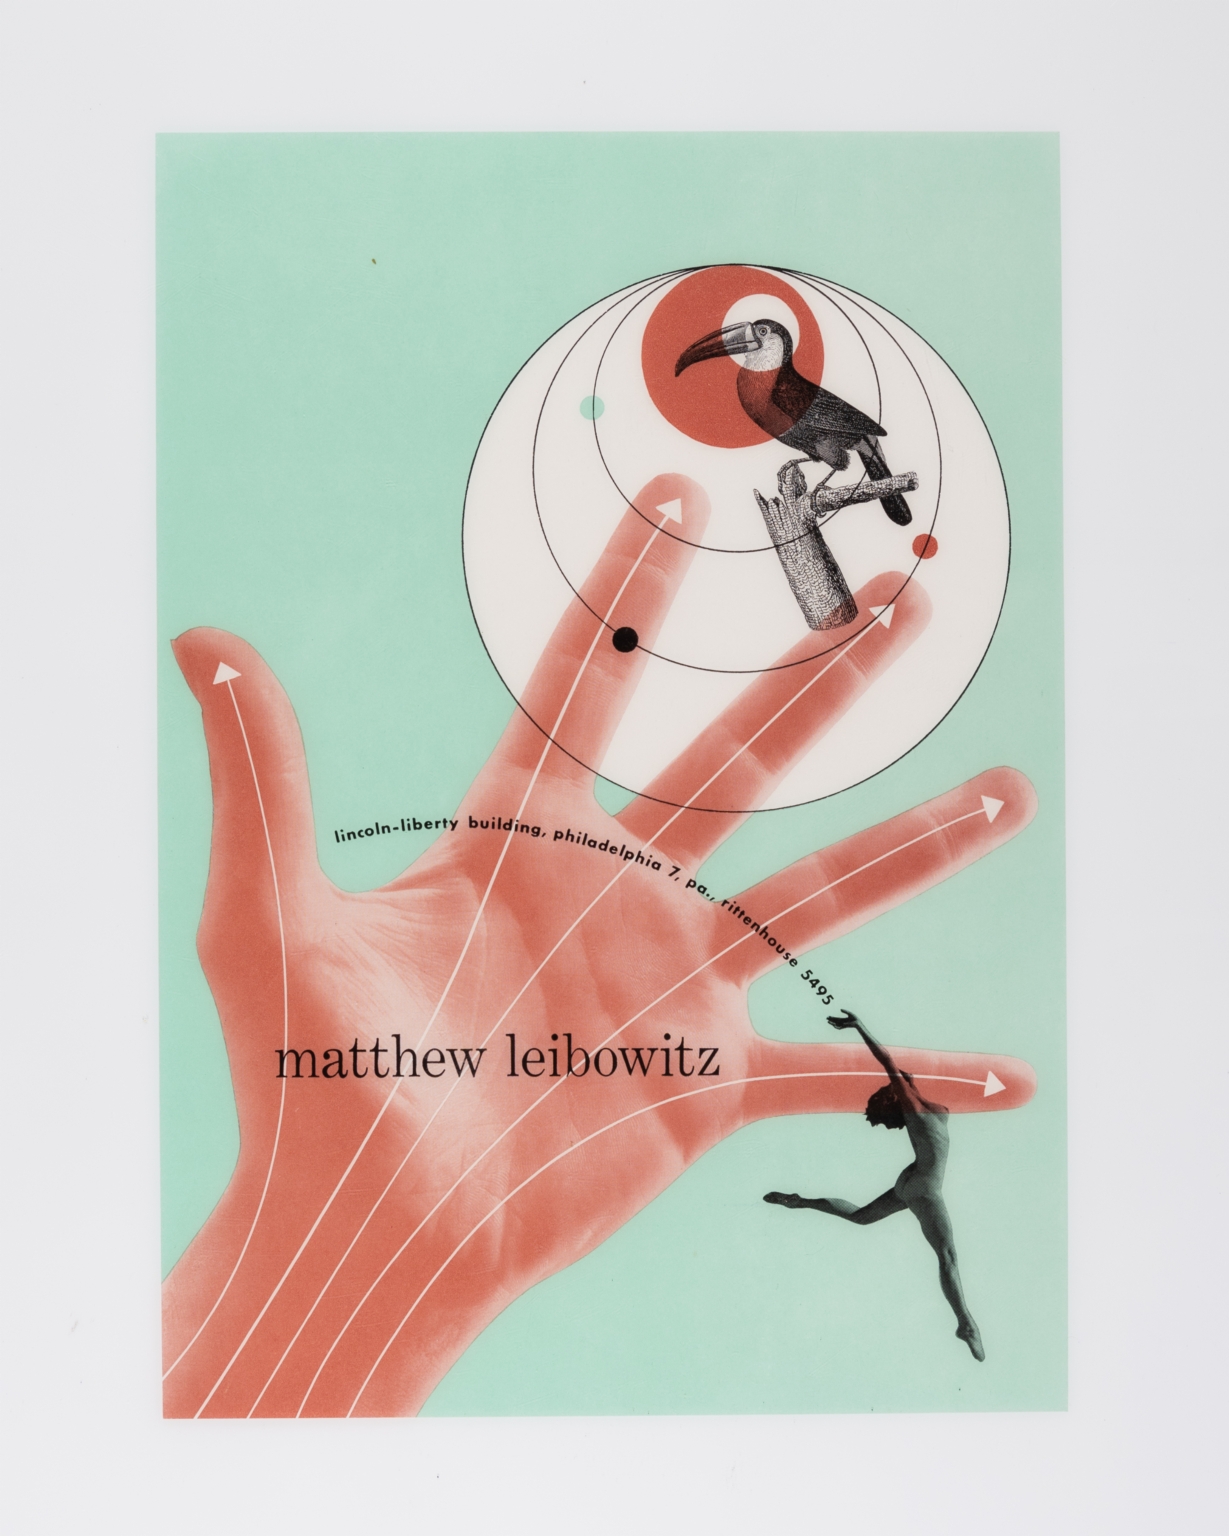 Matthew Leibowitz promotional advertisement